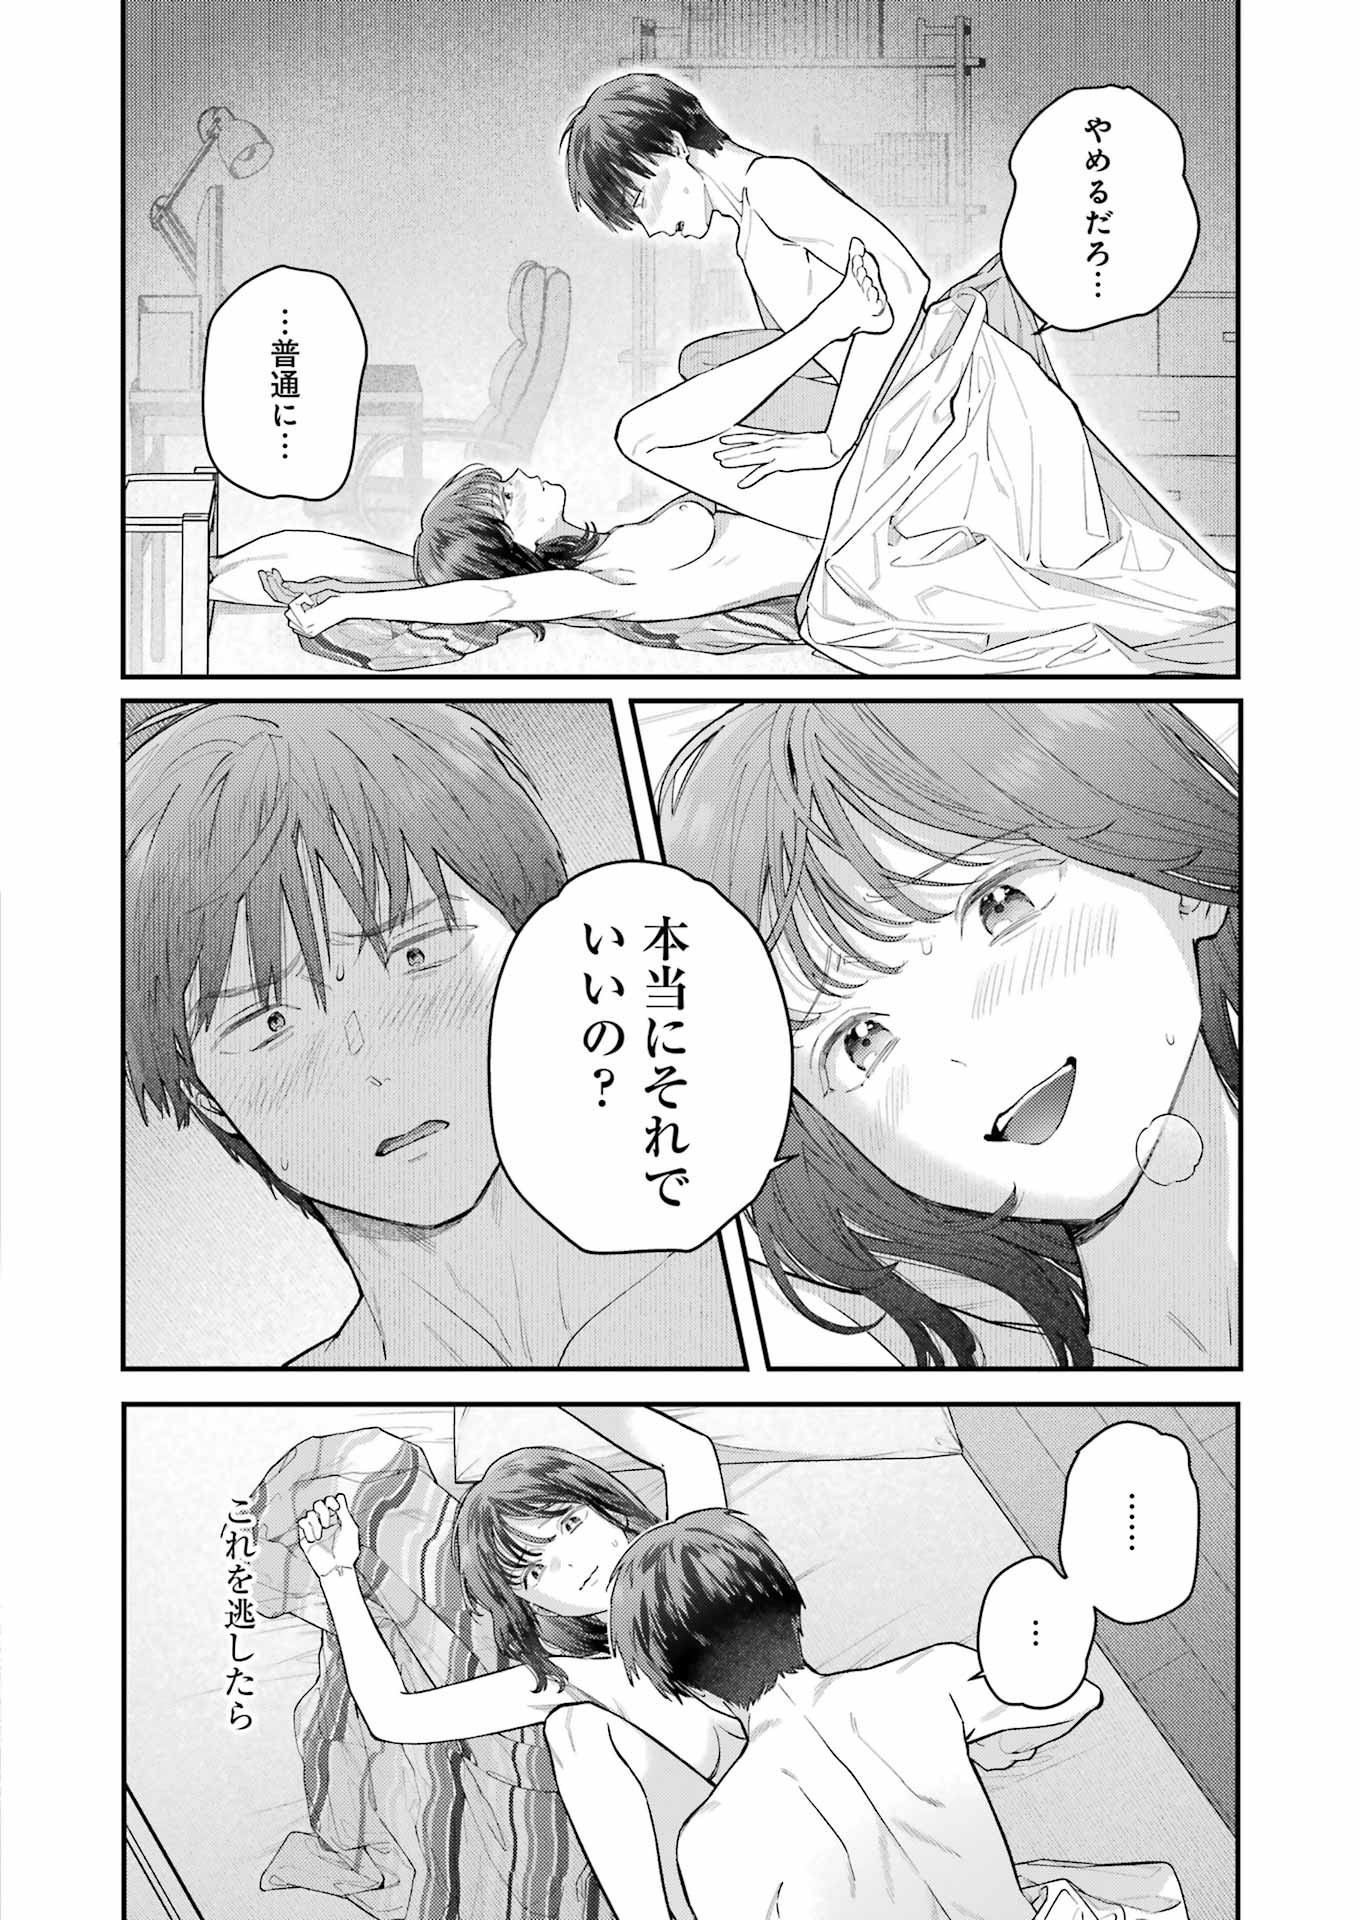 Jigoku ni Ochite yo, Onii-chan - Chapter 26 - Page 2